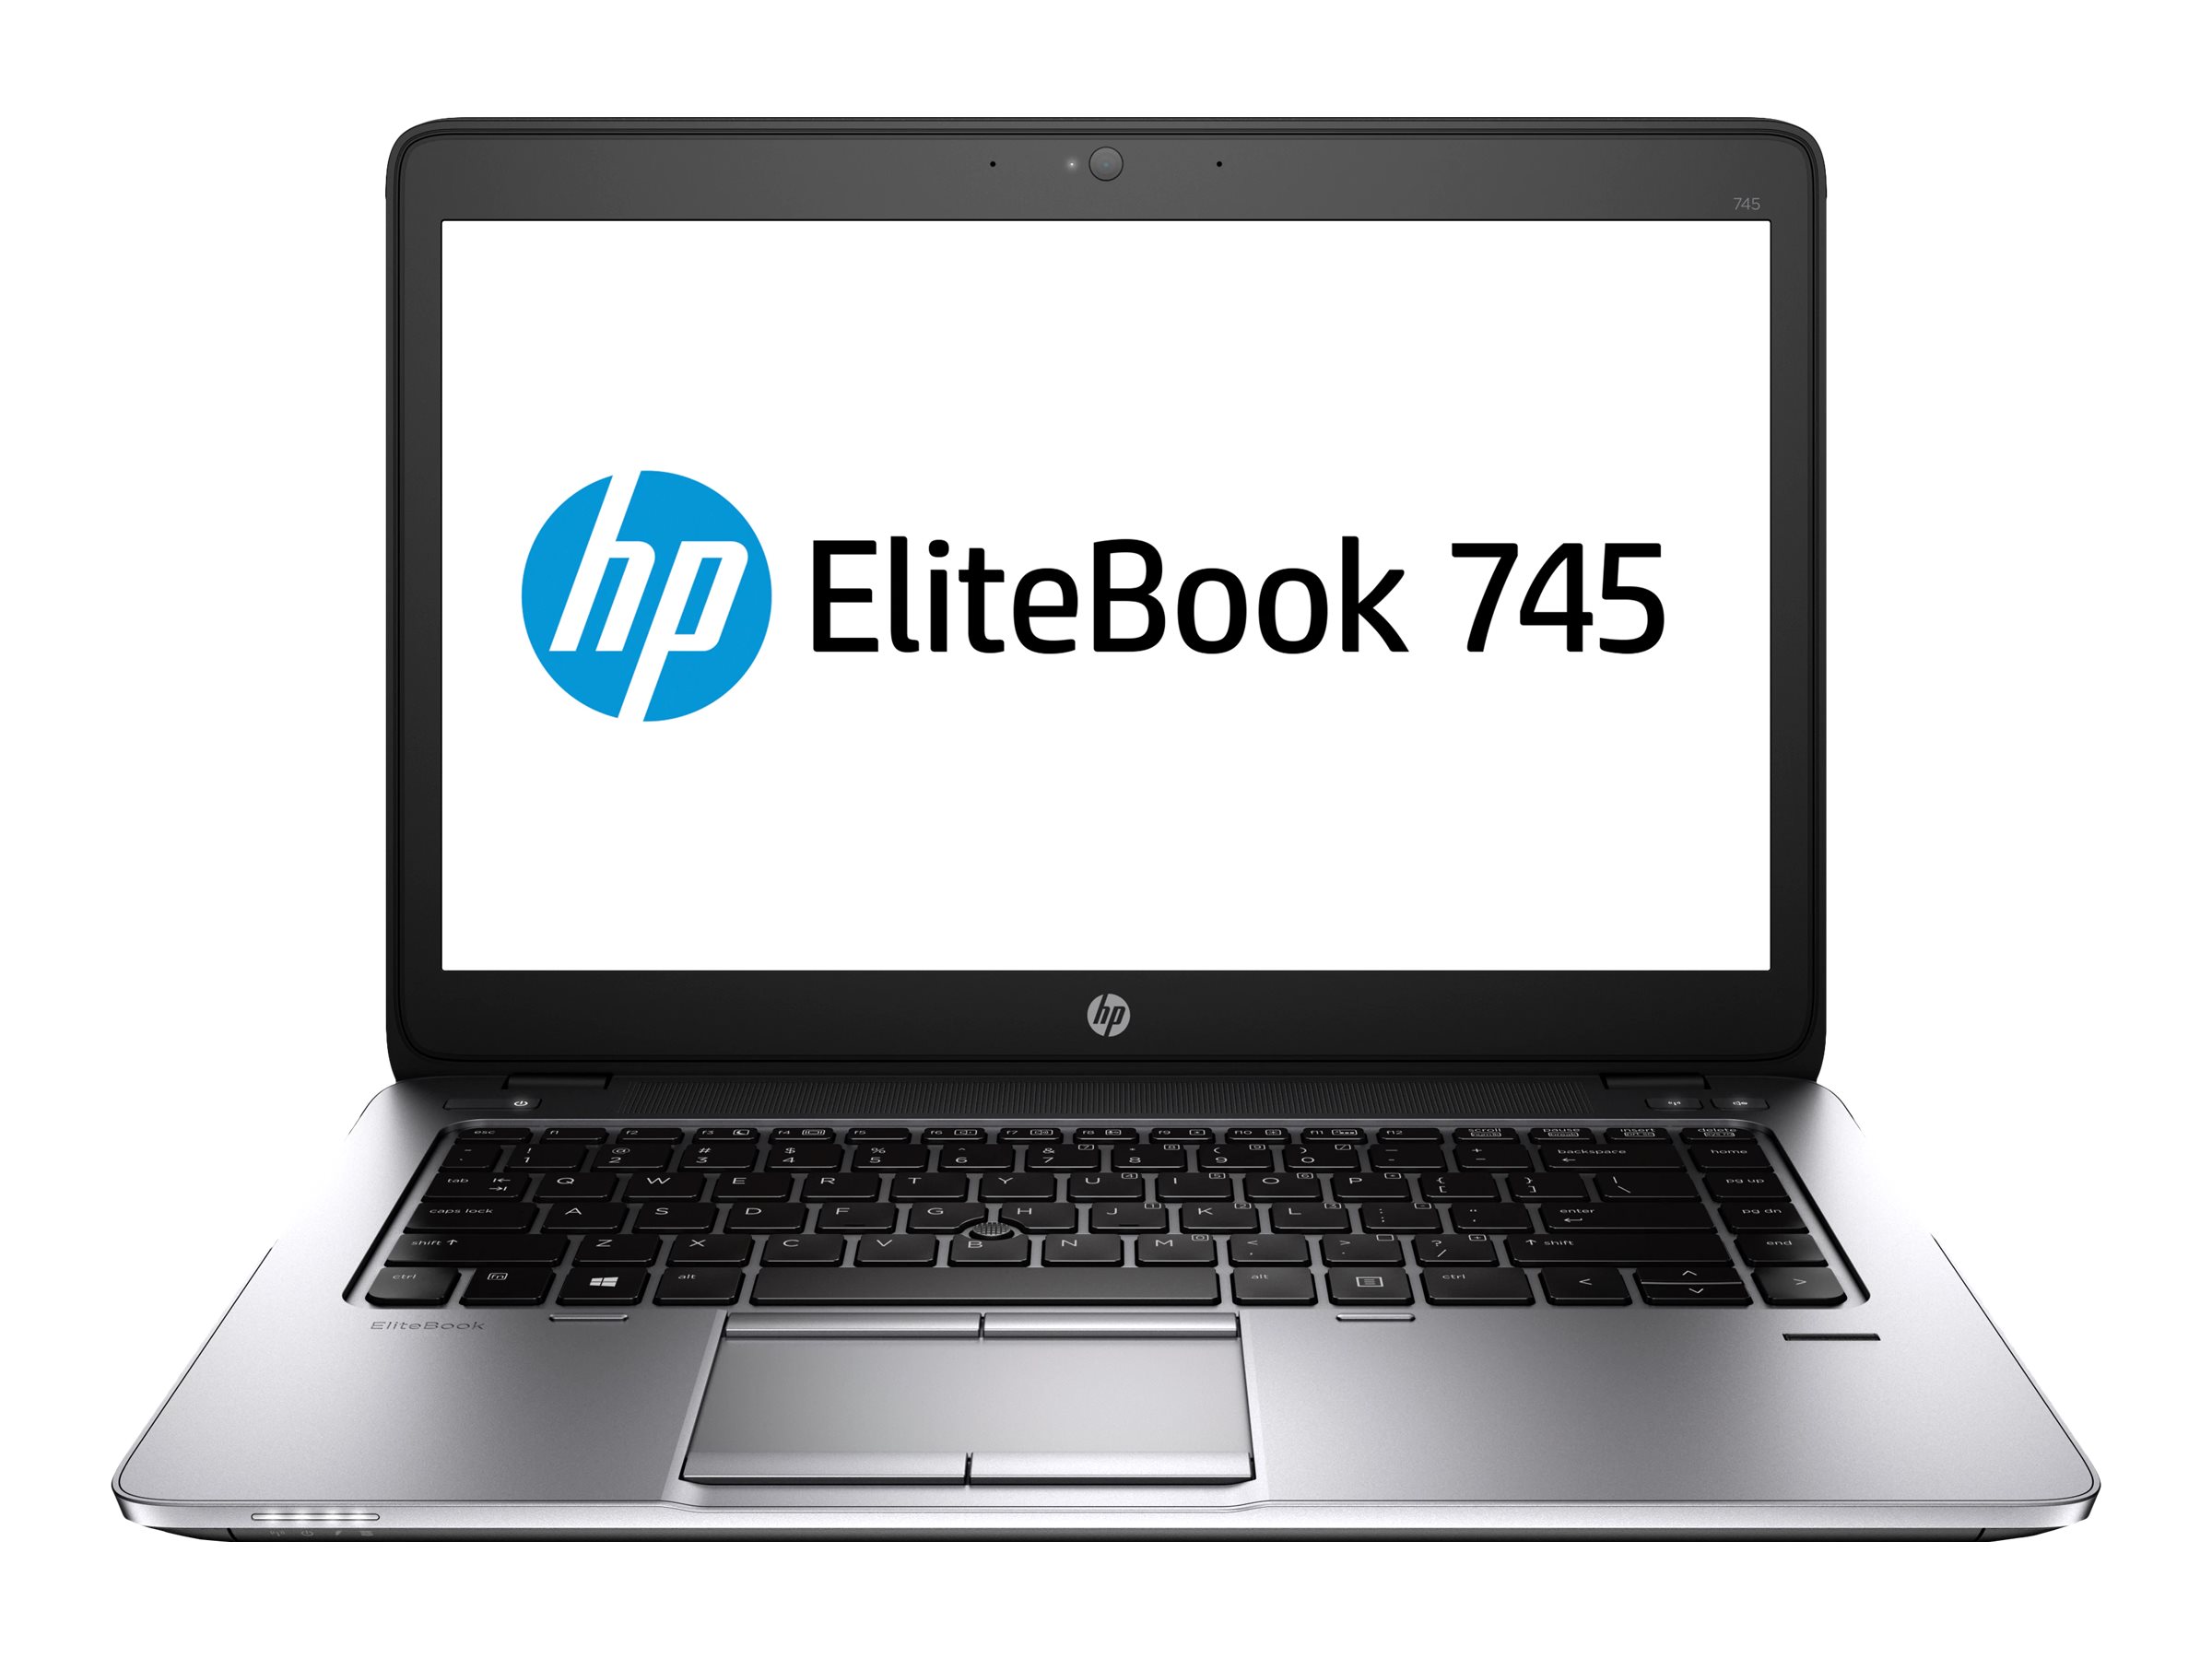 HP EliteBook 745 G2 Notebook